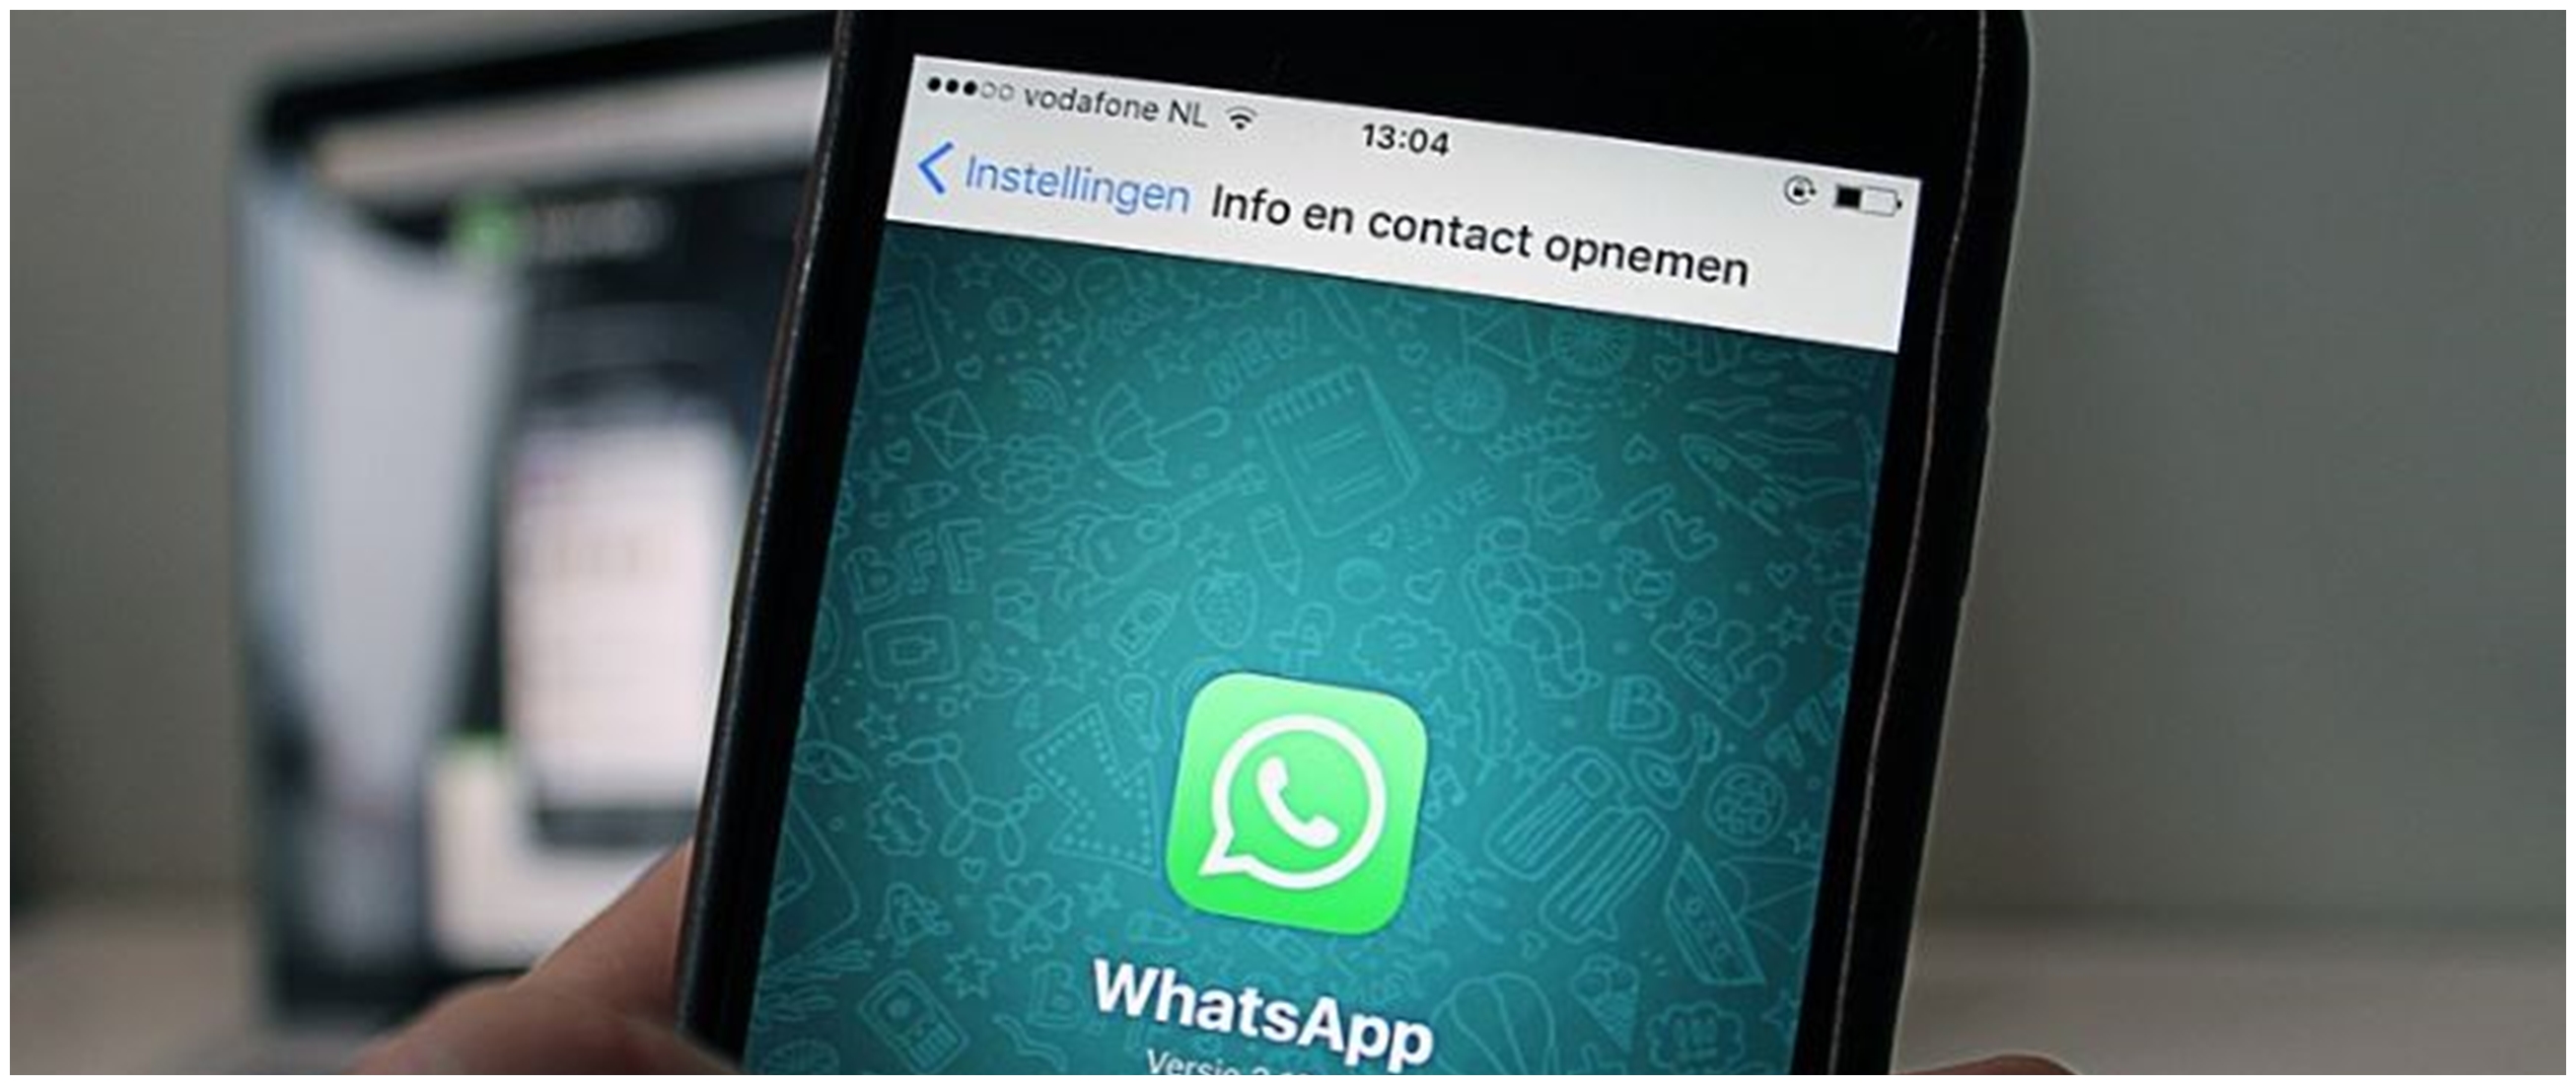 Ini cara agar kamu nggak otomatis masuk ke grup WhatsApp (WA)